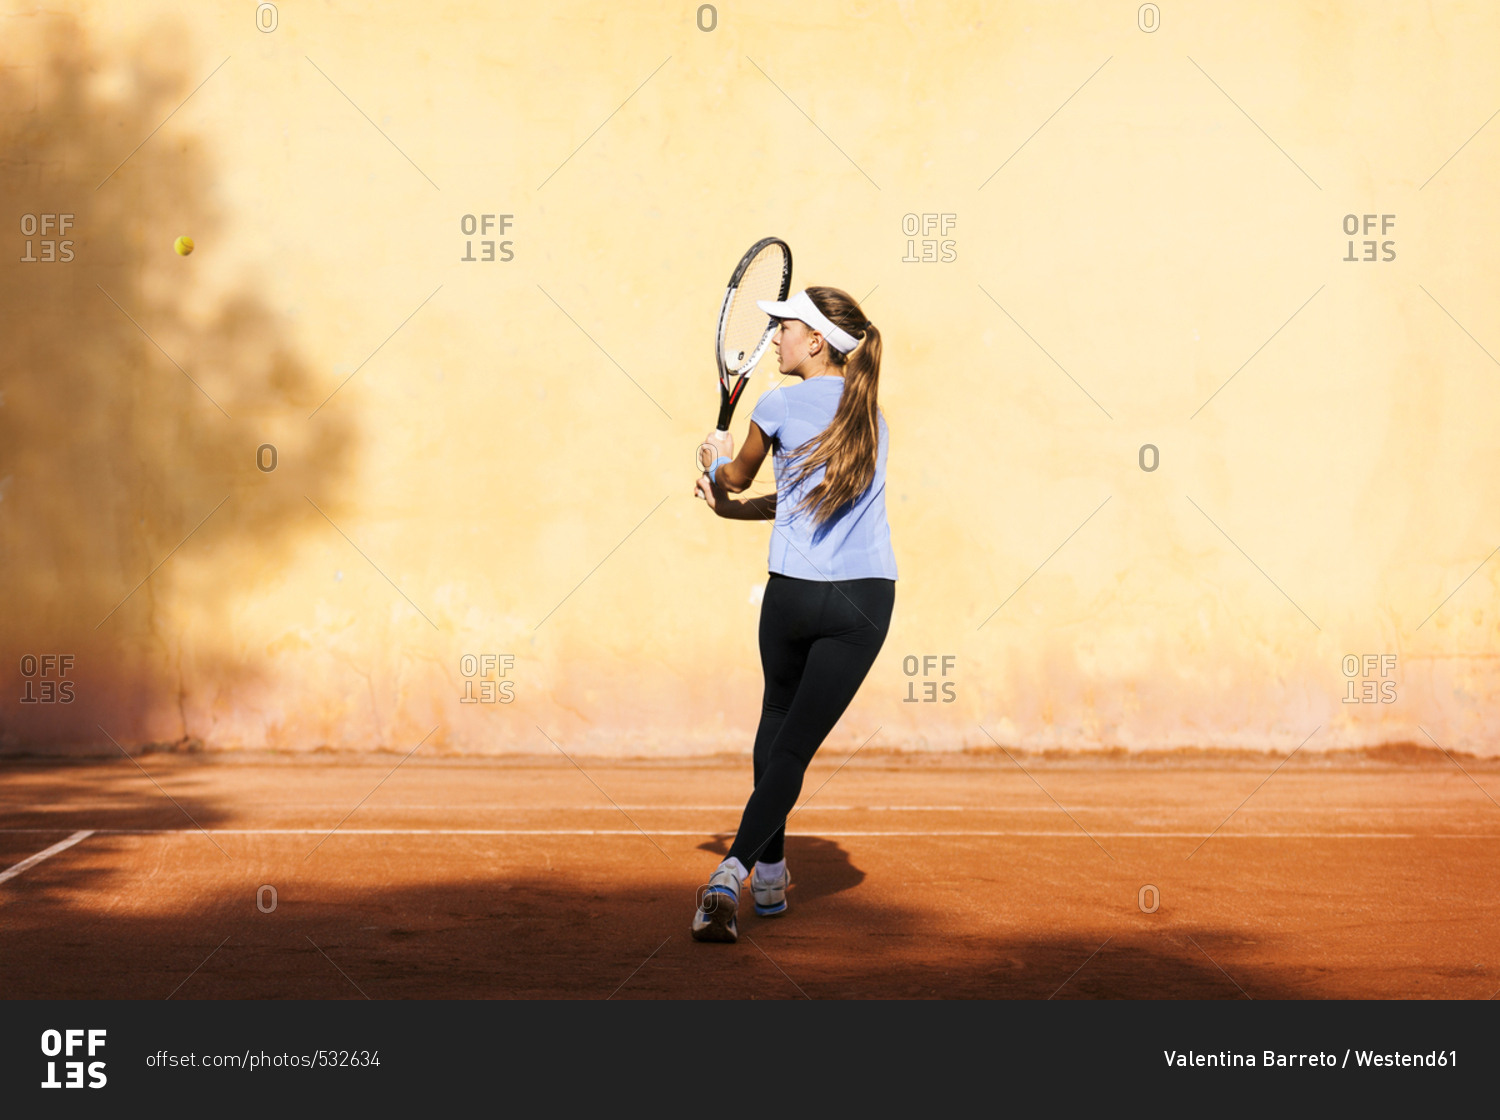 Teenage girl playing tennis on court